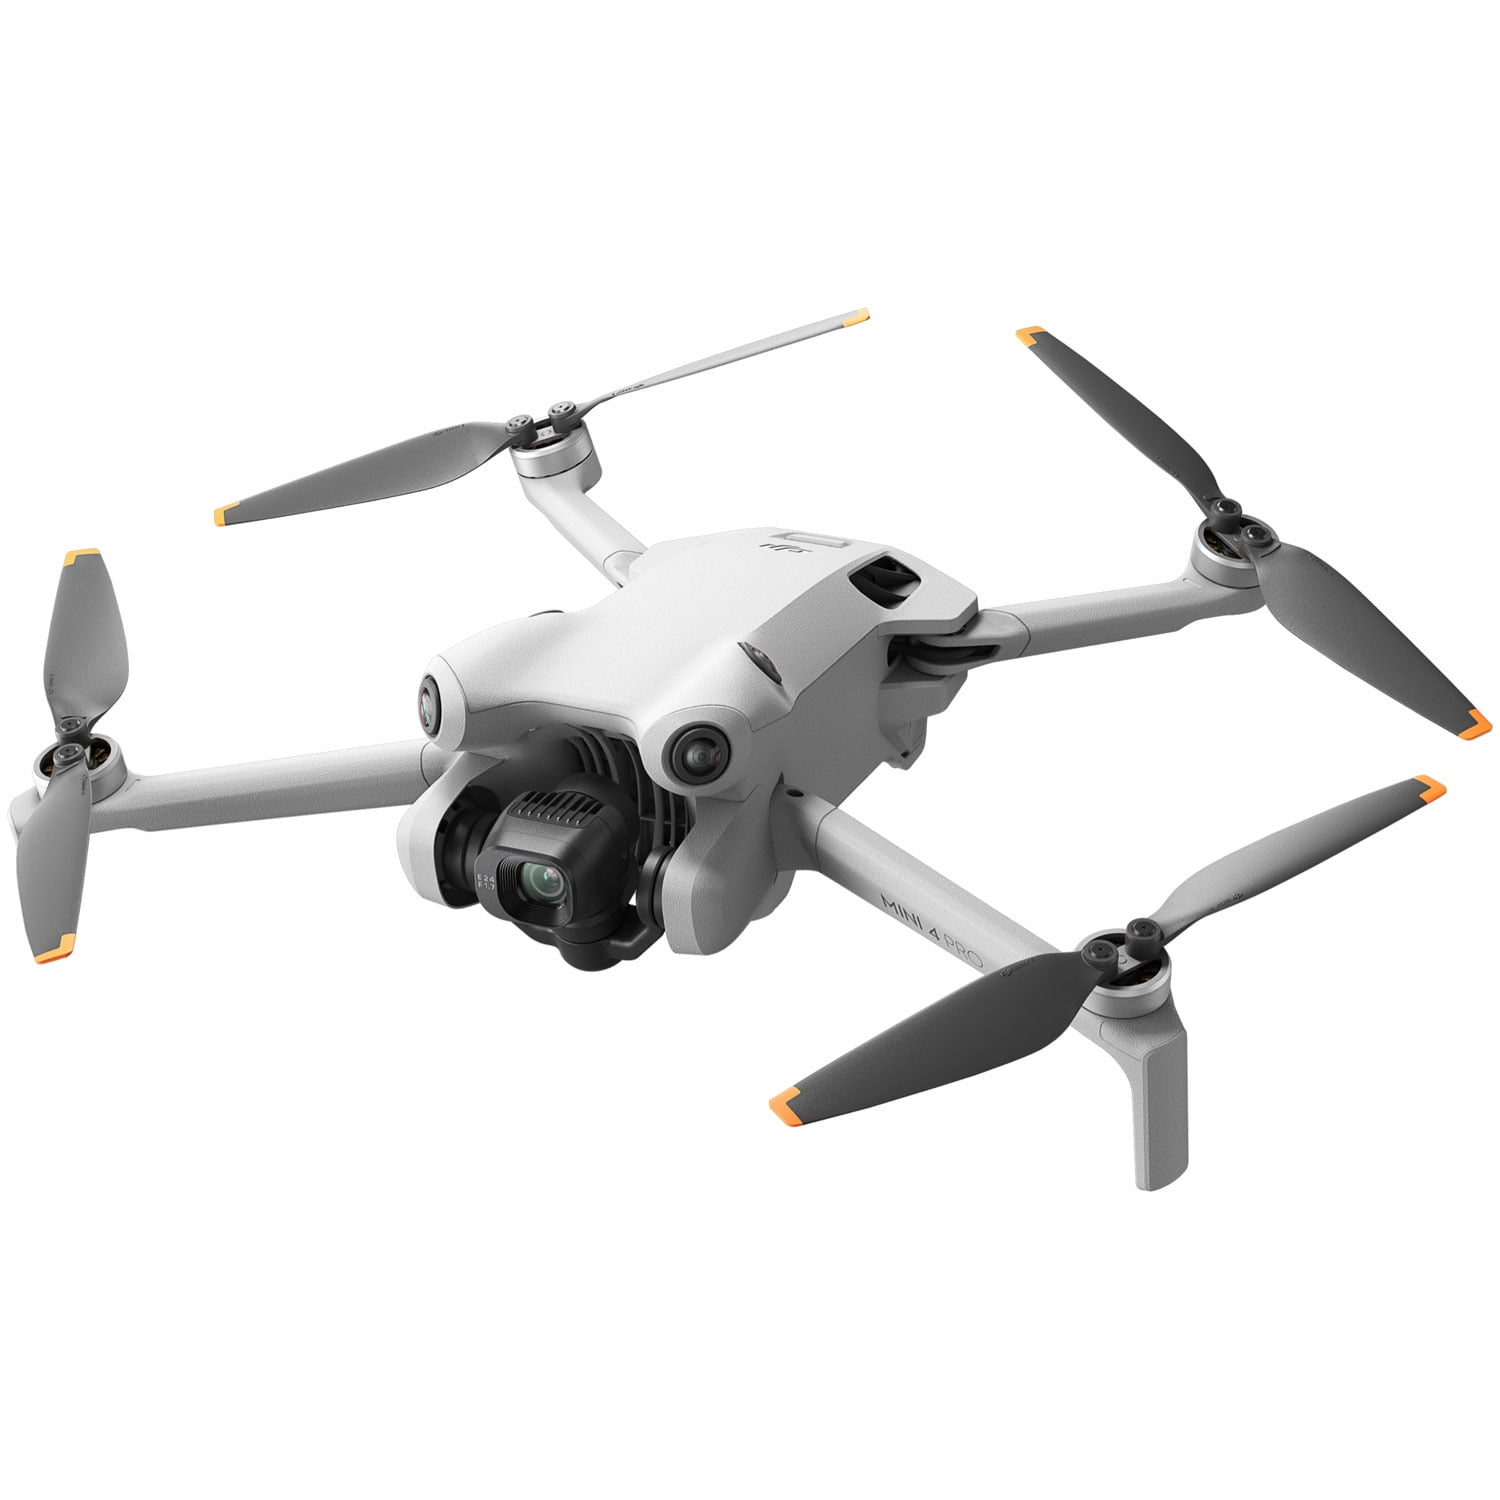 Digital Village DJI Mavic Mini Portable Foldable Drone Quadcopter with  SanDisk 32GB MicroSD Card, Carrying Case, Landing